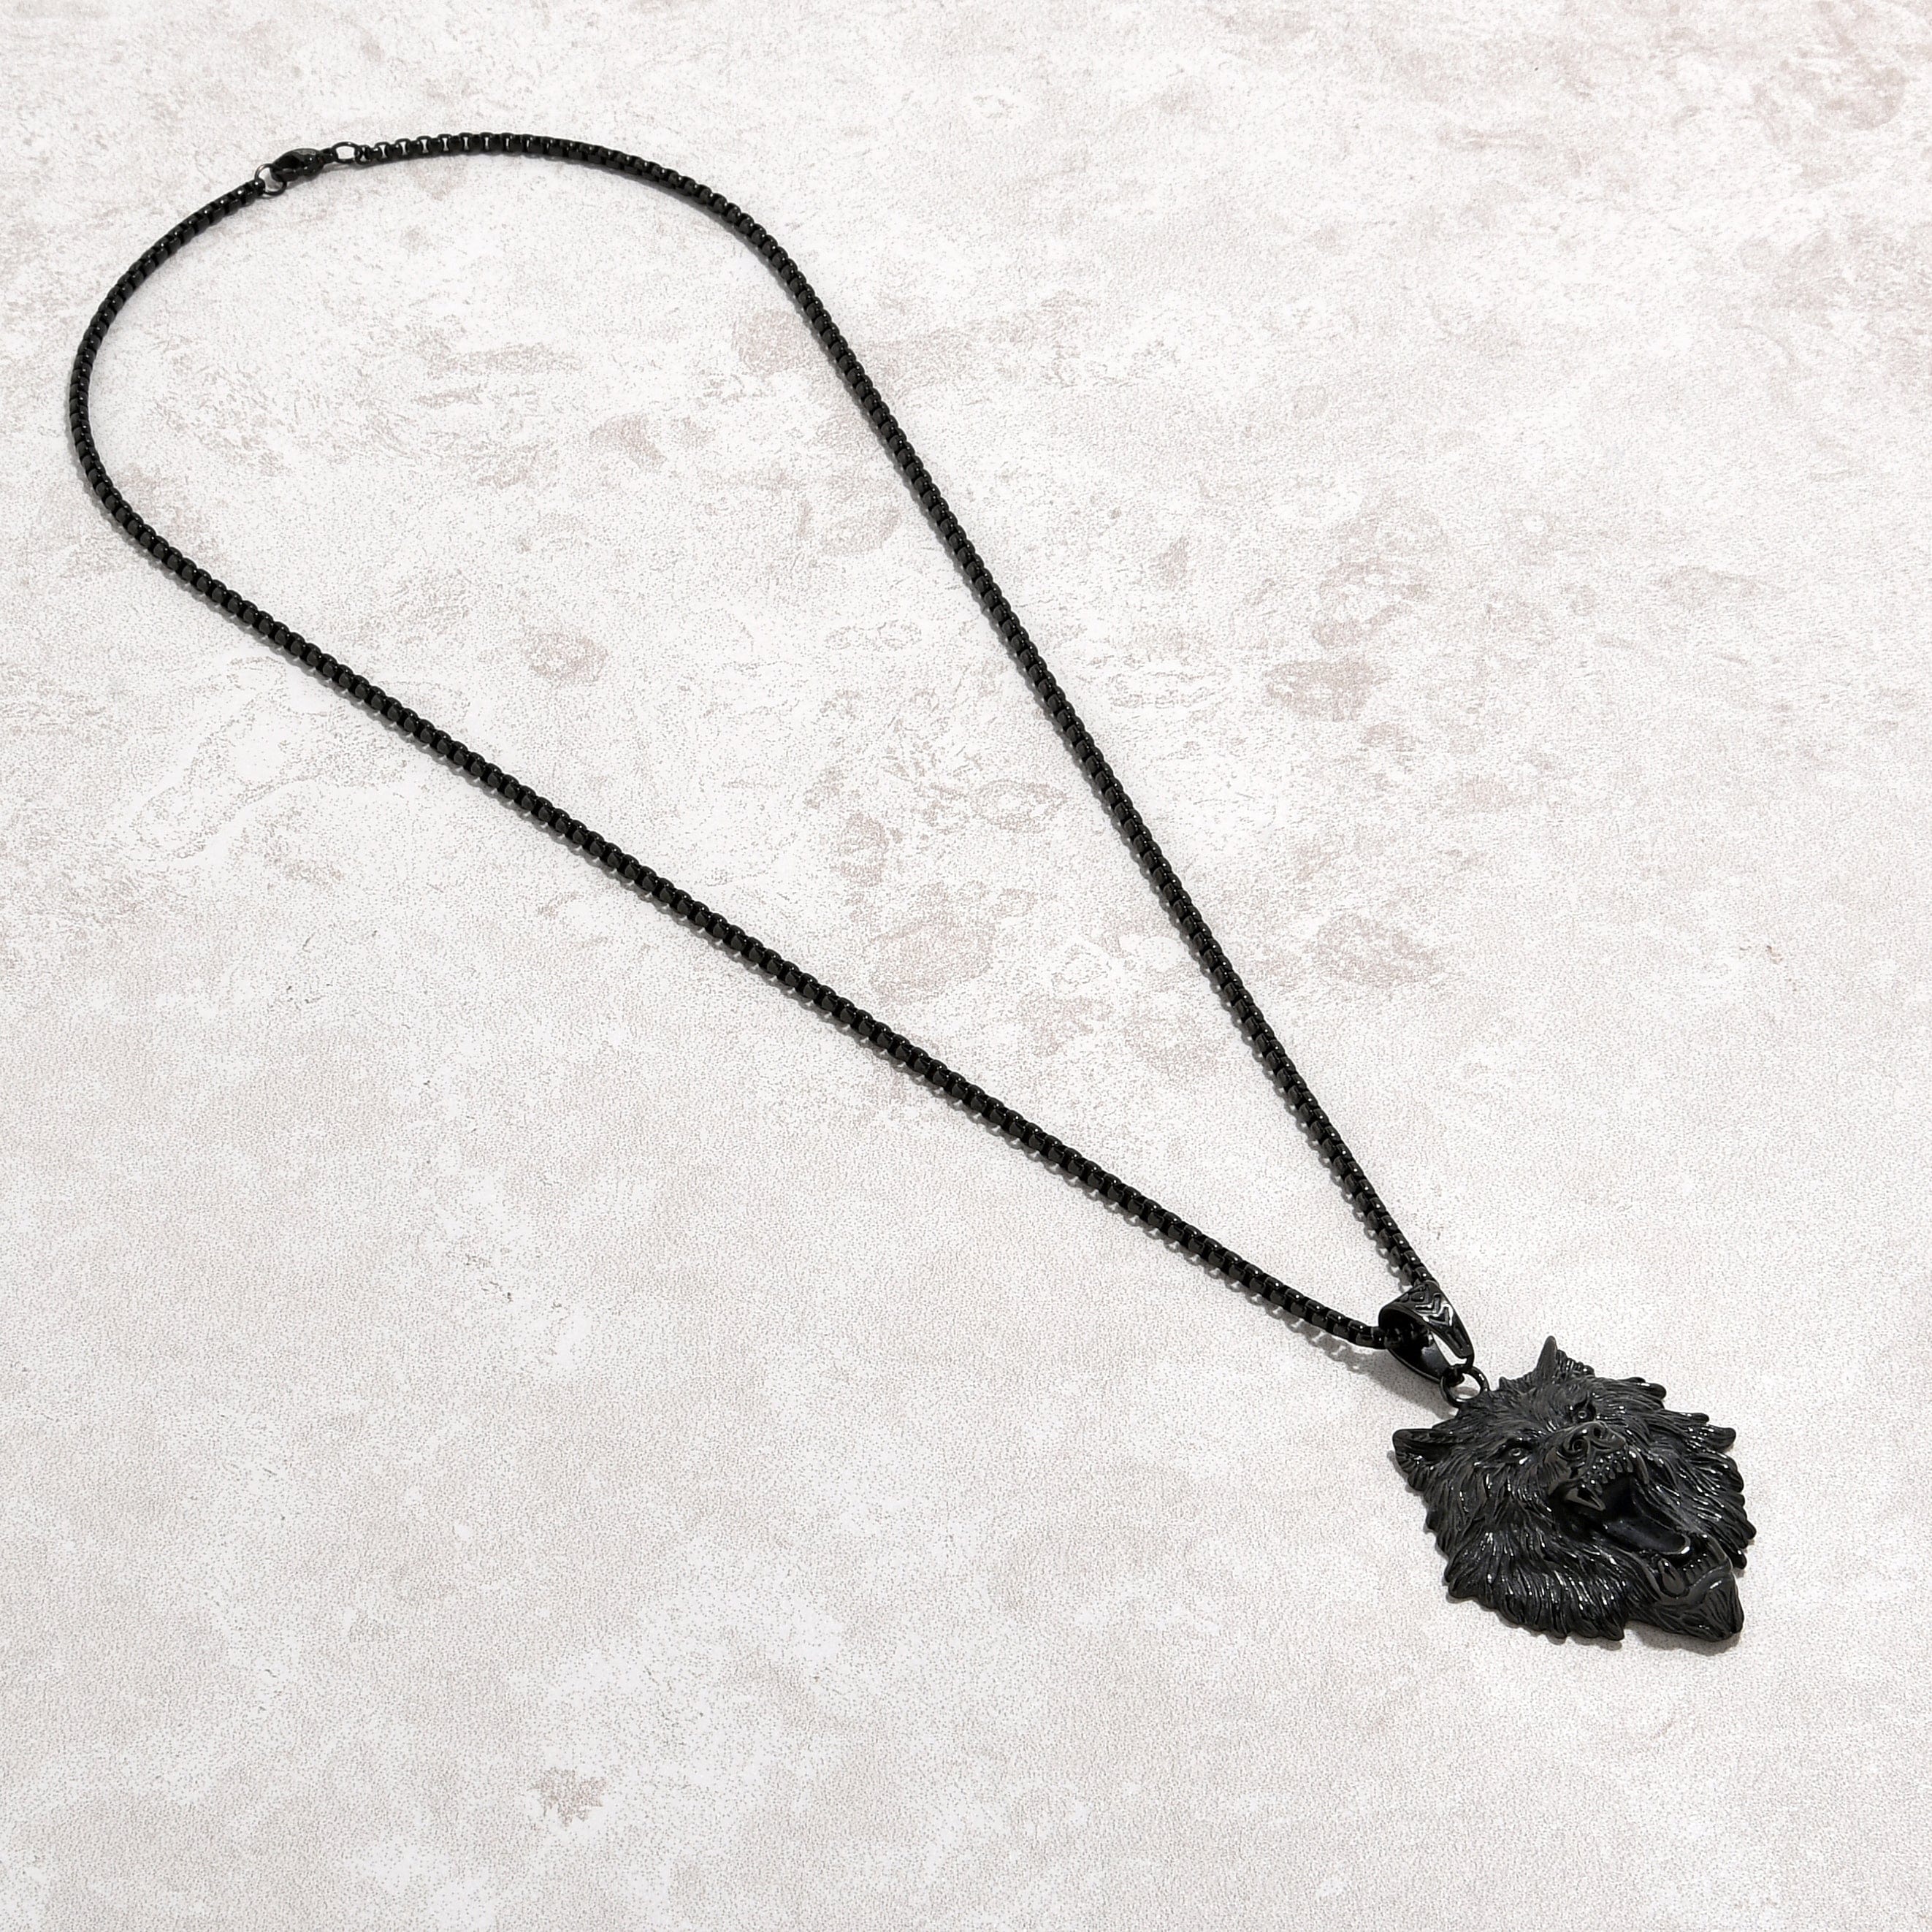 Kalifano Steel Hearts Jewelry Black Wolf Steel Hearts Necklace SHN528-B